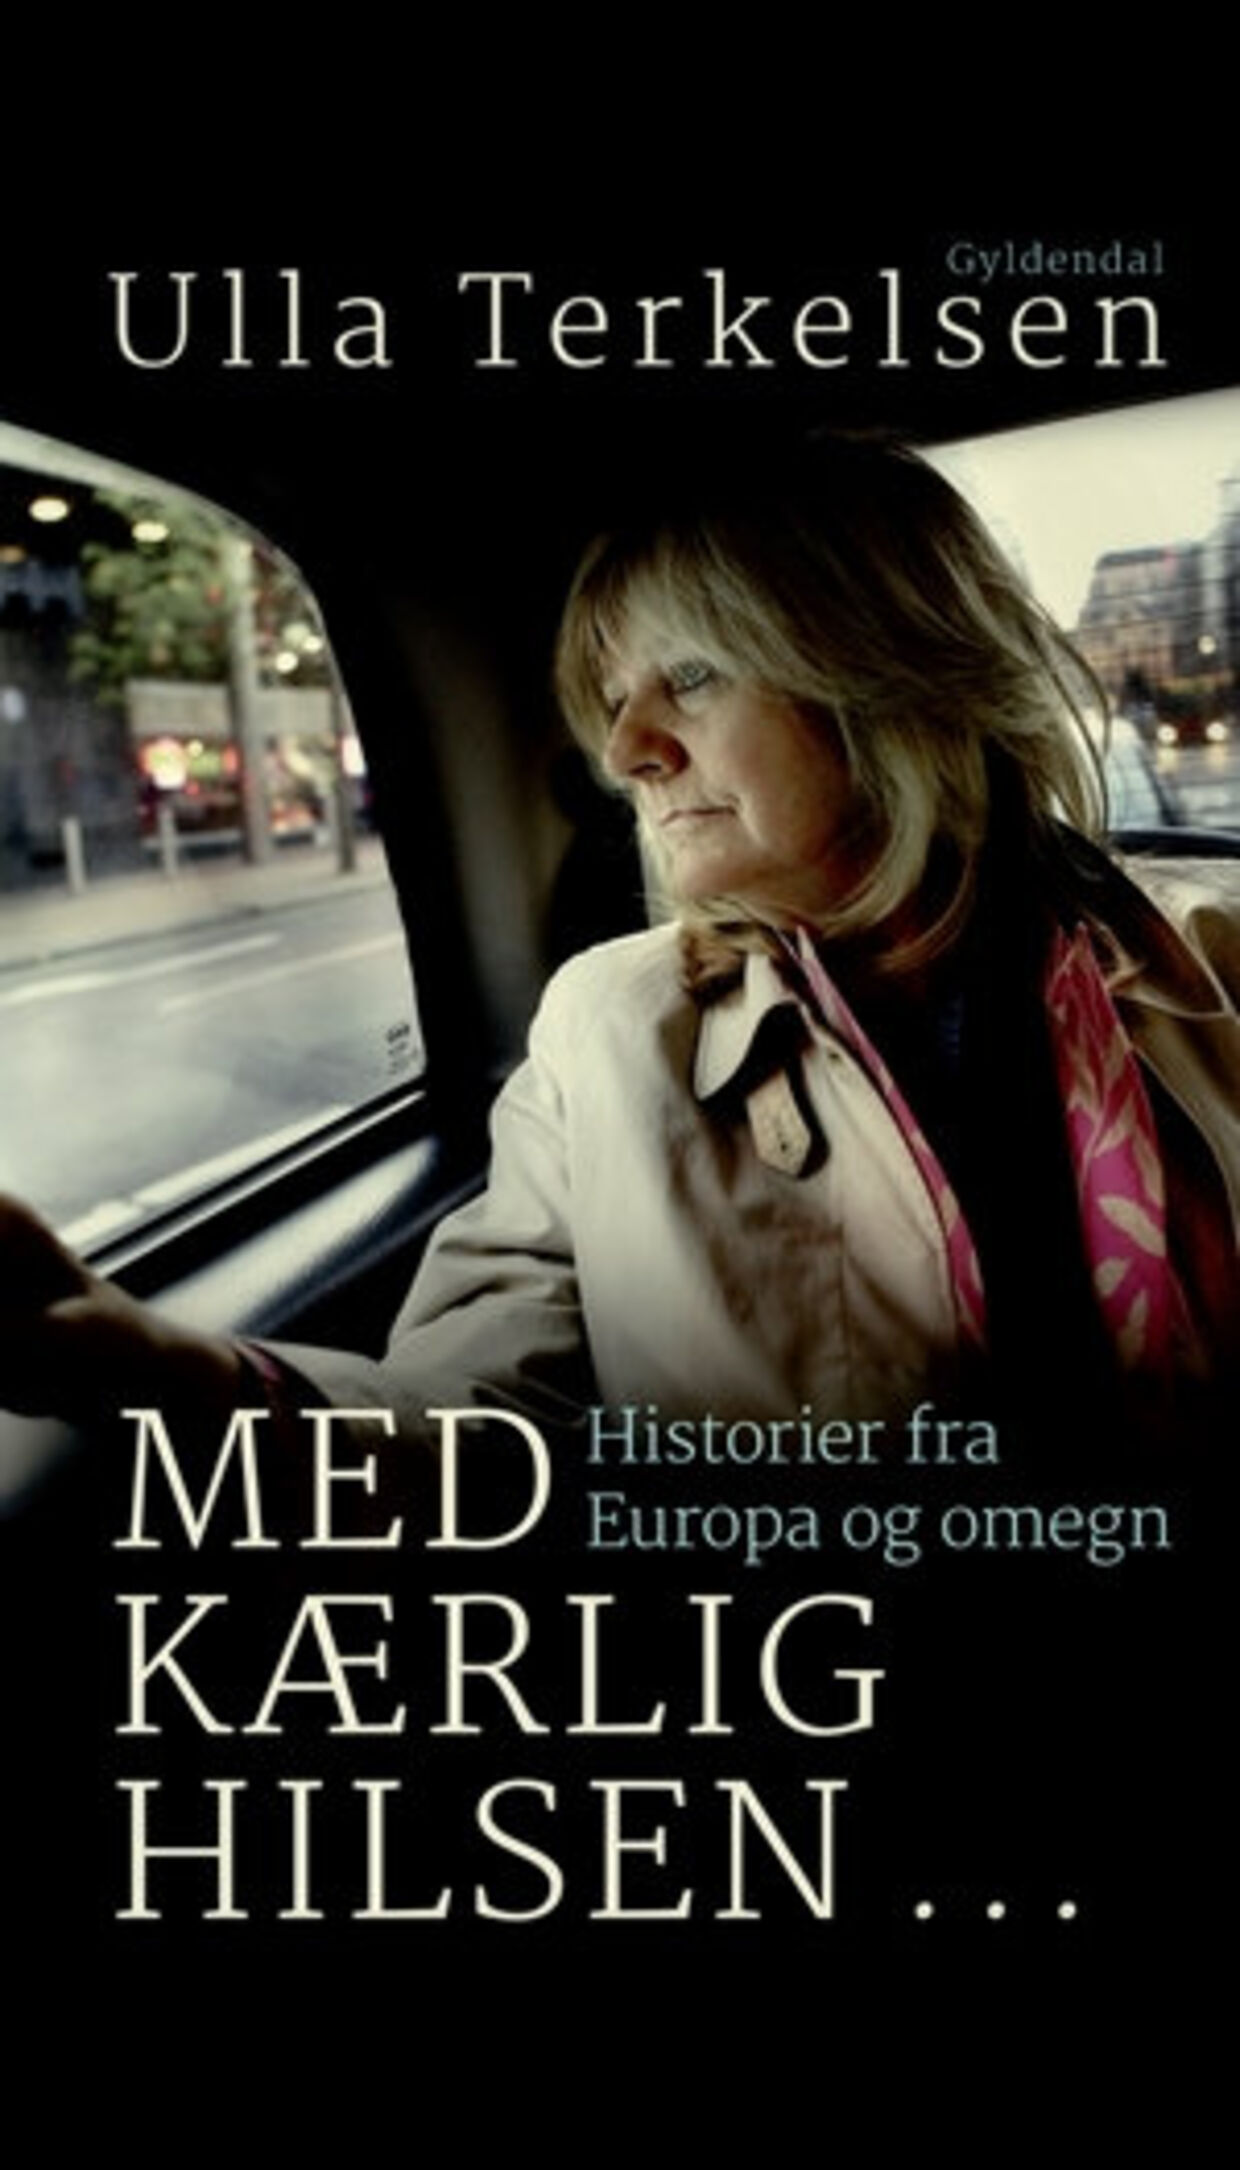 Bogen 'Med kærlig hilsen.. Historier fra Europa og omegn' er udkommet på Gyldendals forlag.